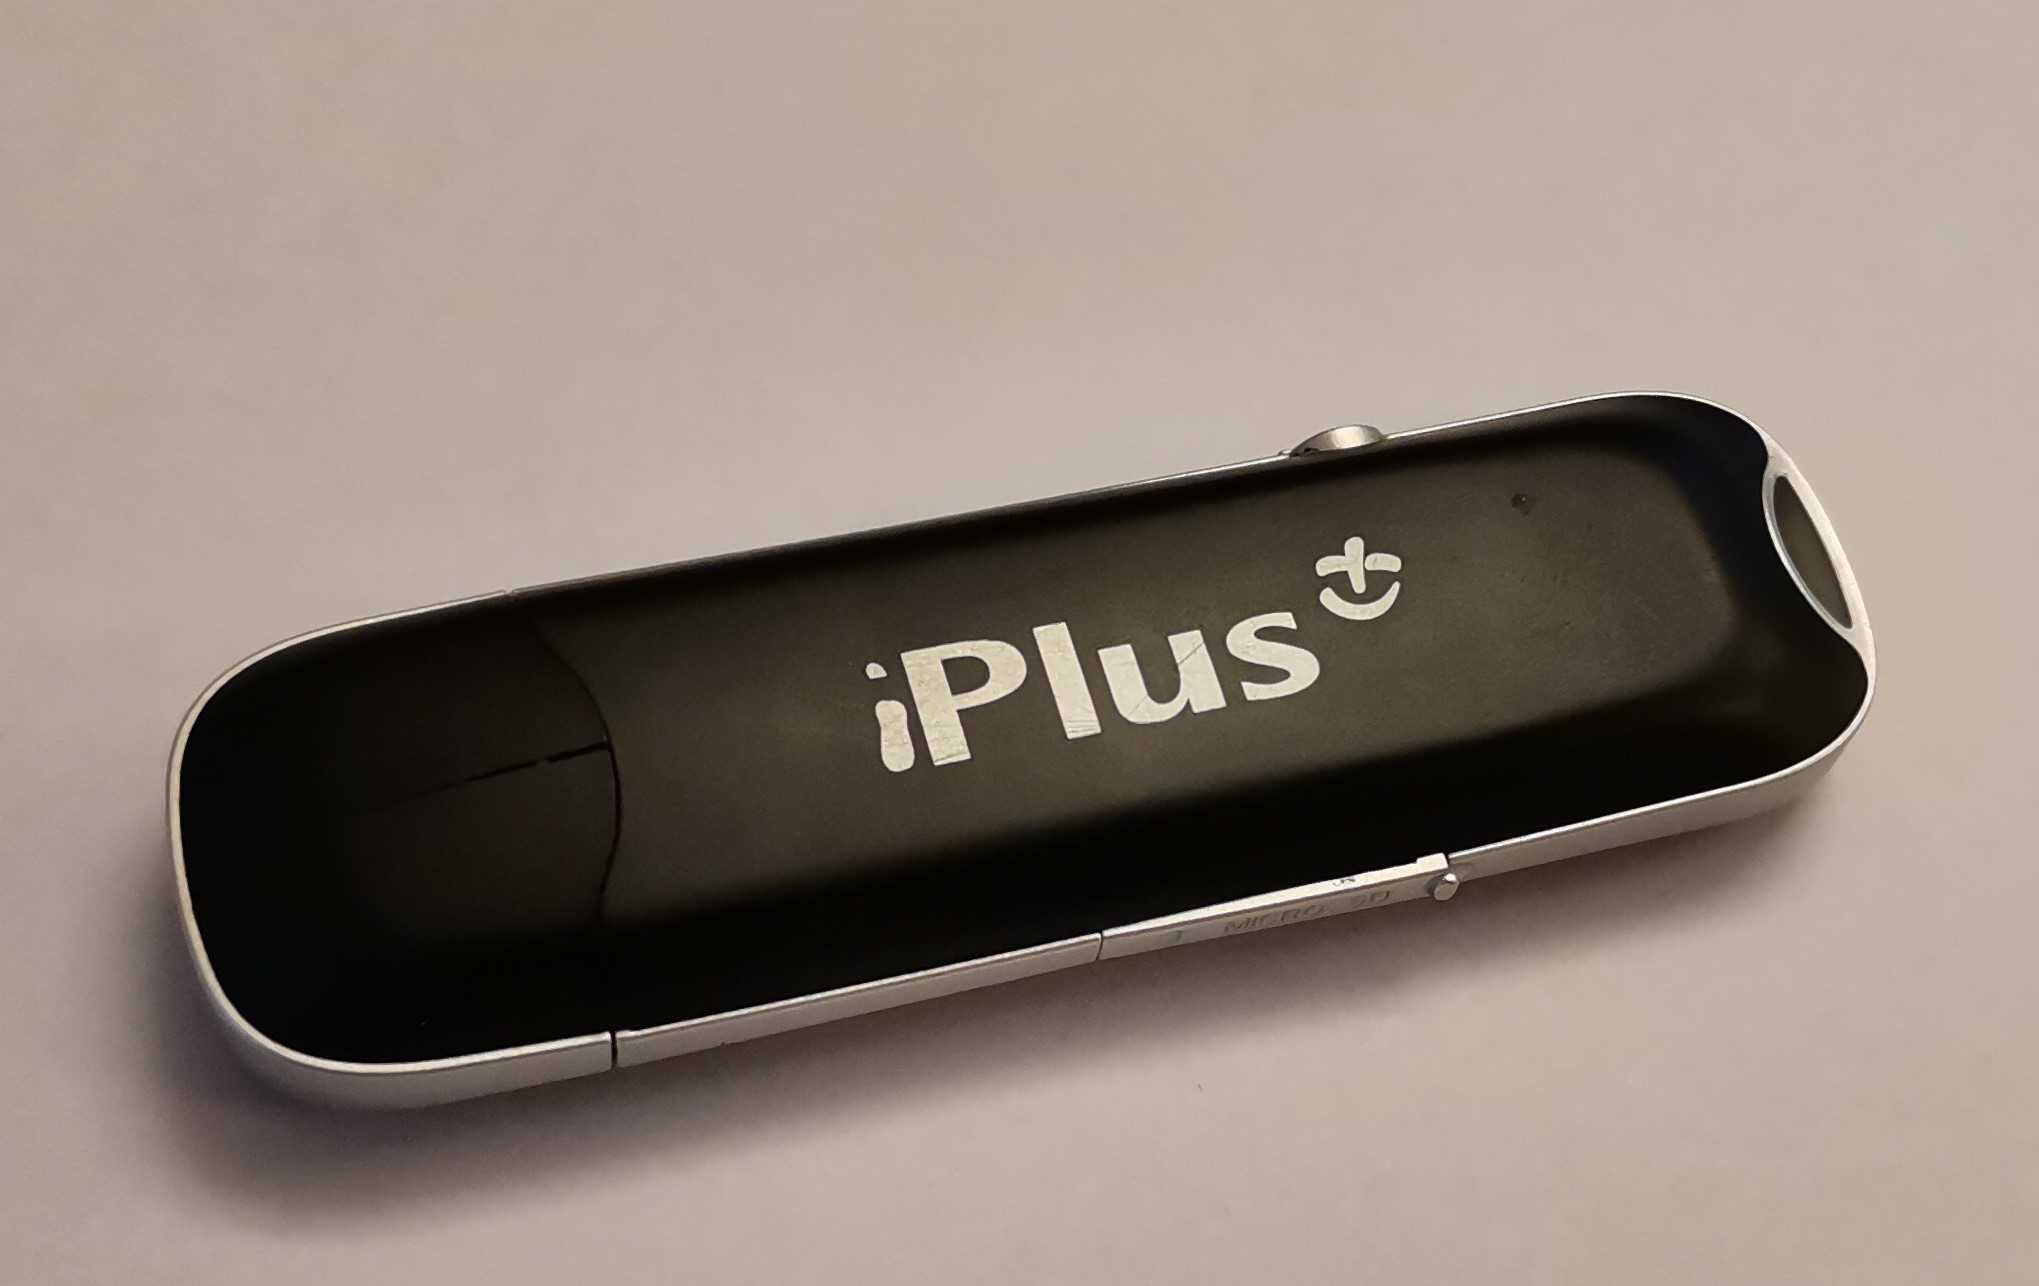 Modem USB Huawei E169 Mobile Connect HSDPA USB Stick (iPlus - czarny)